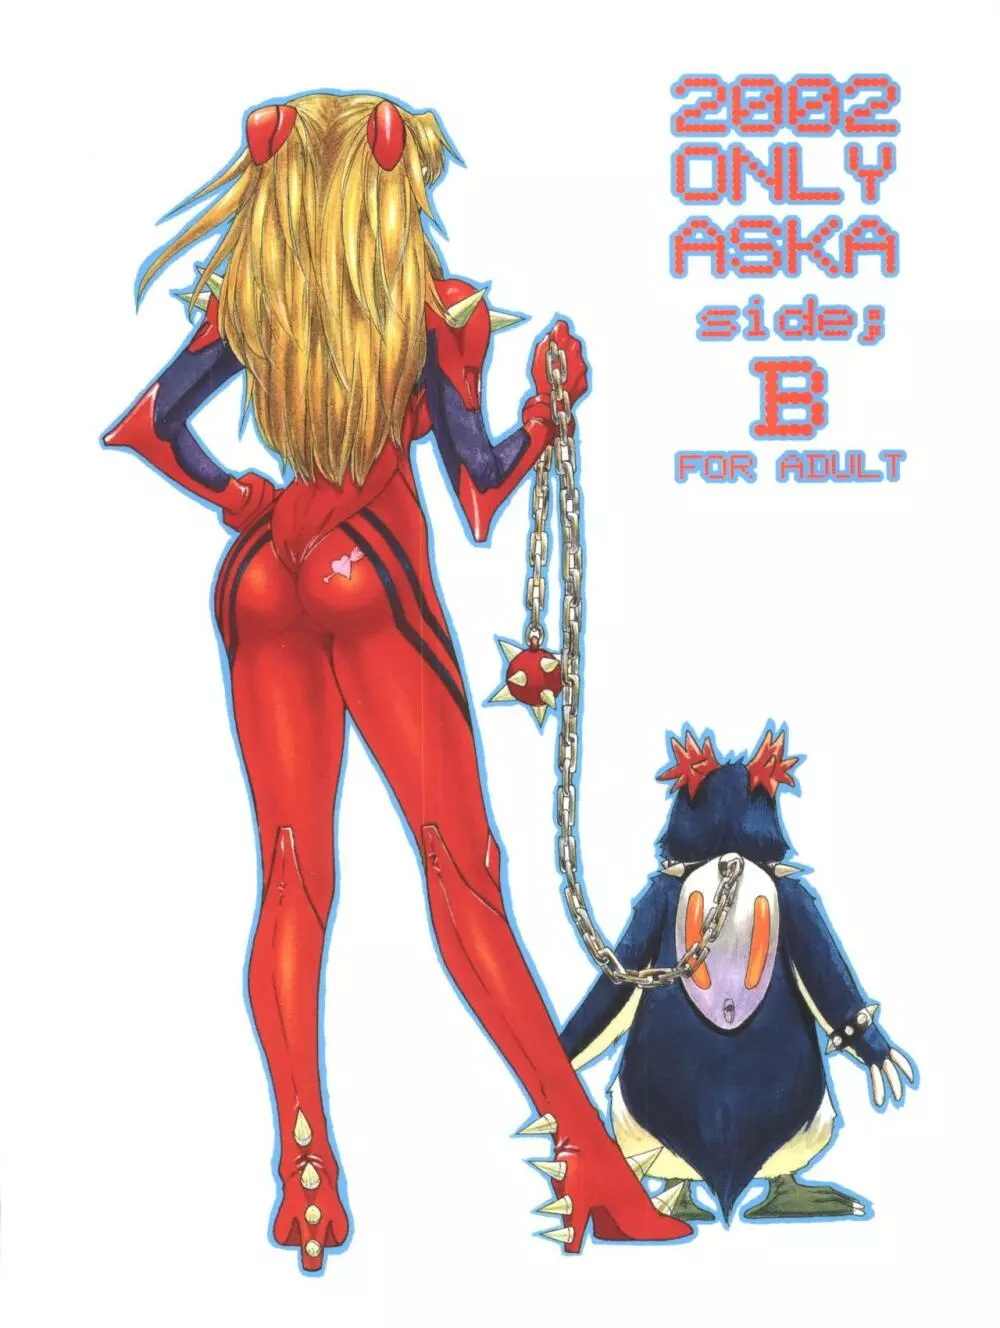 2002 ONLY ASKA side B 56ページ